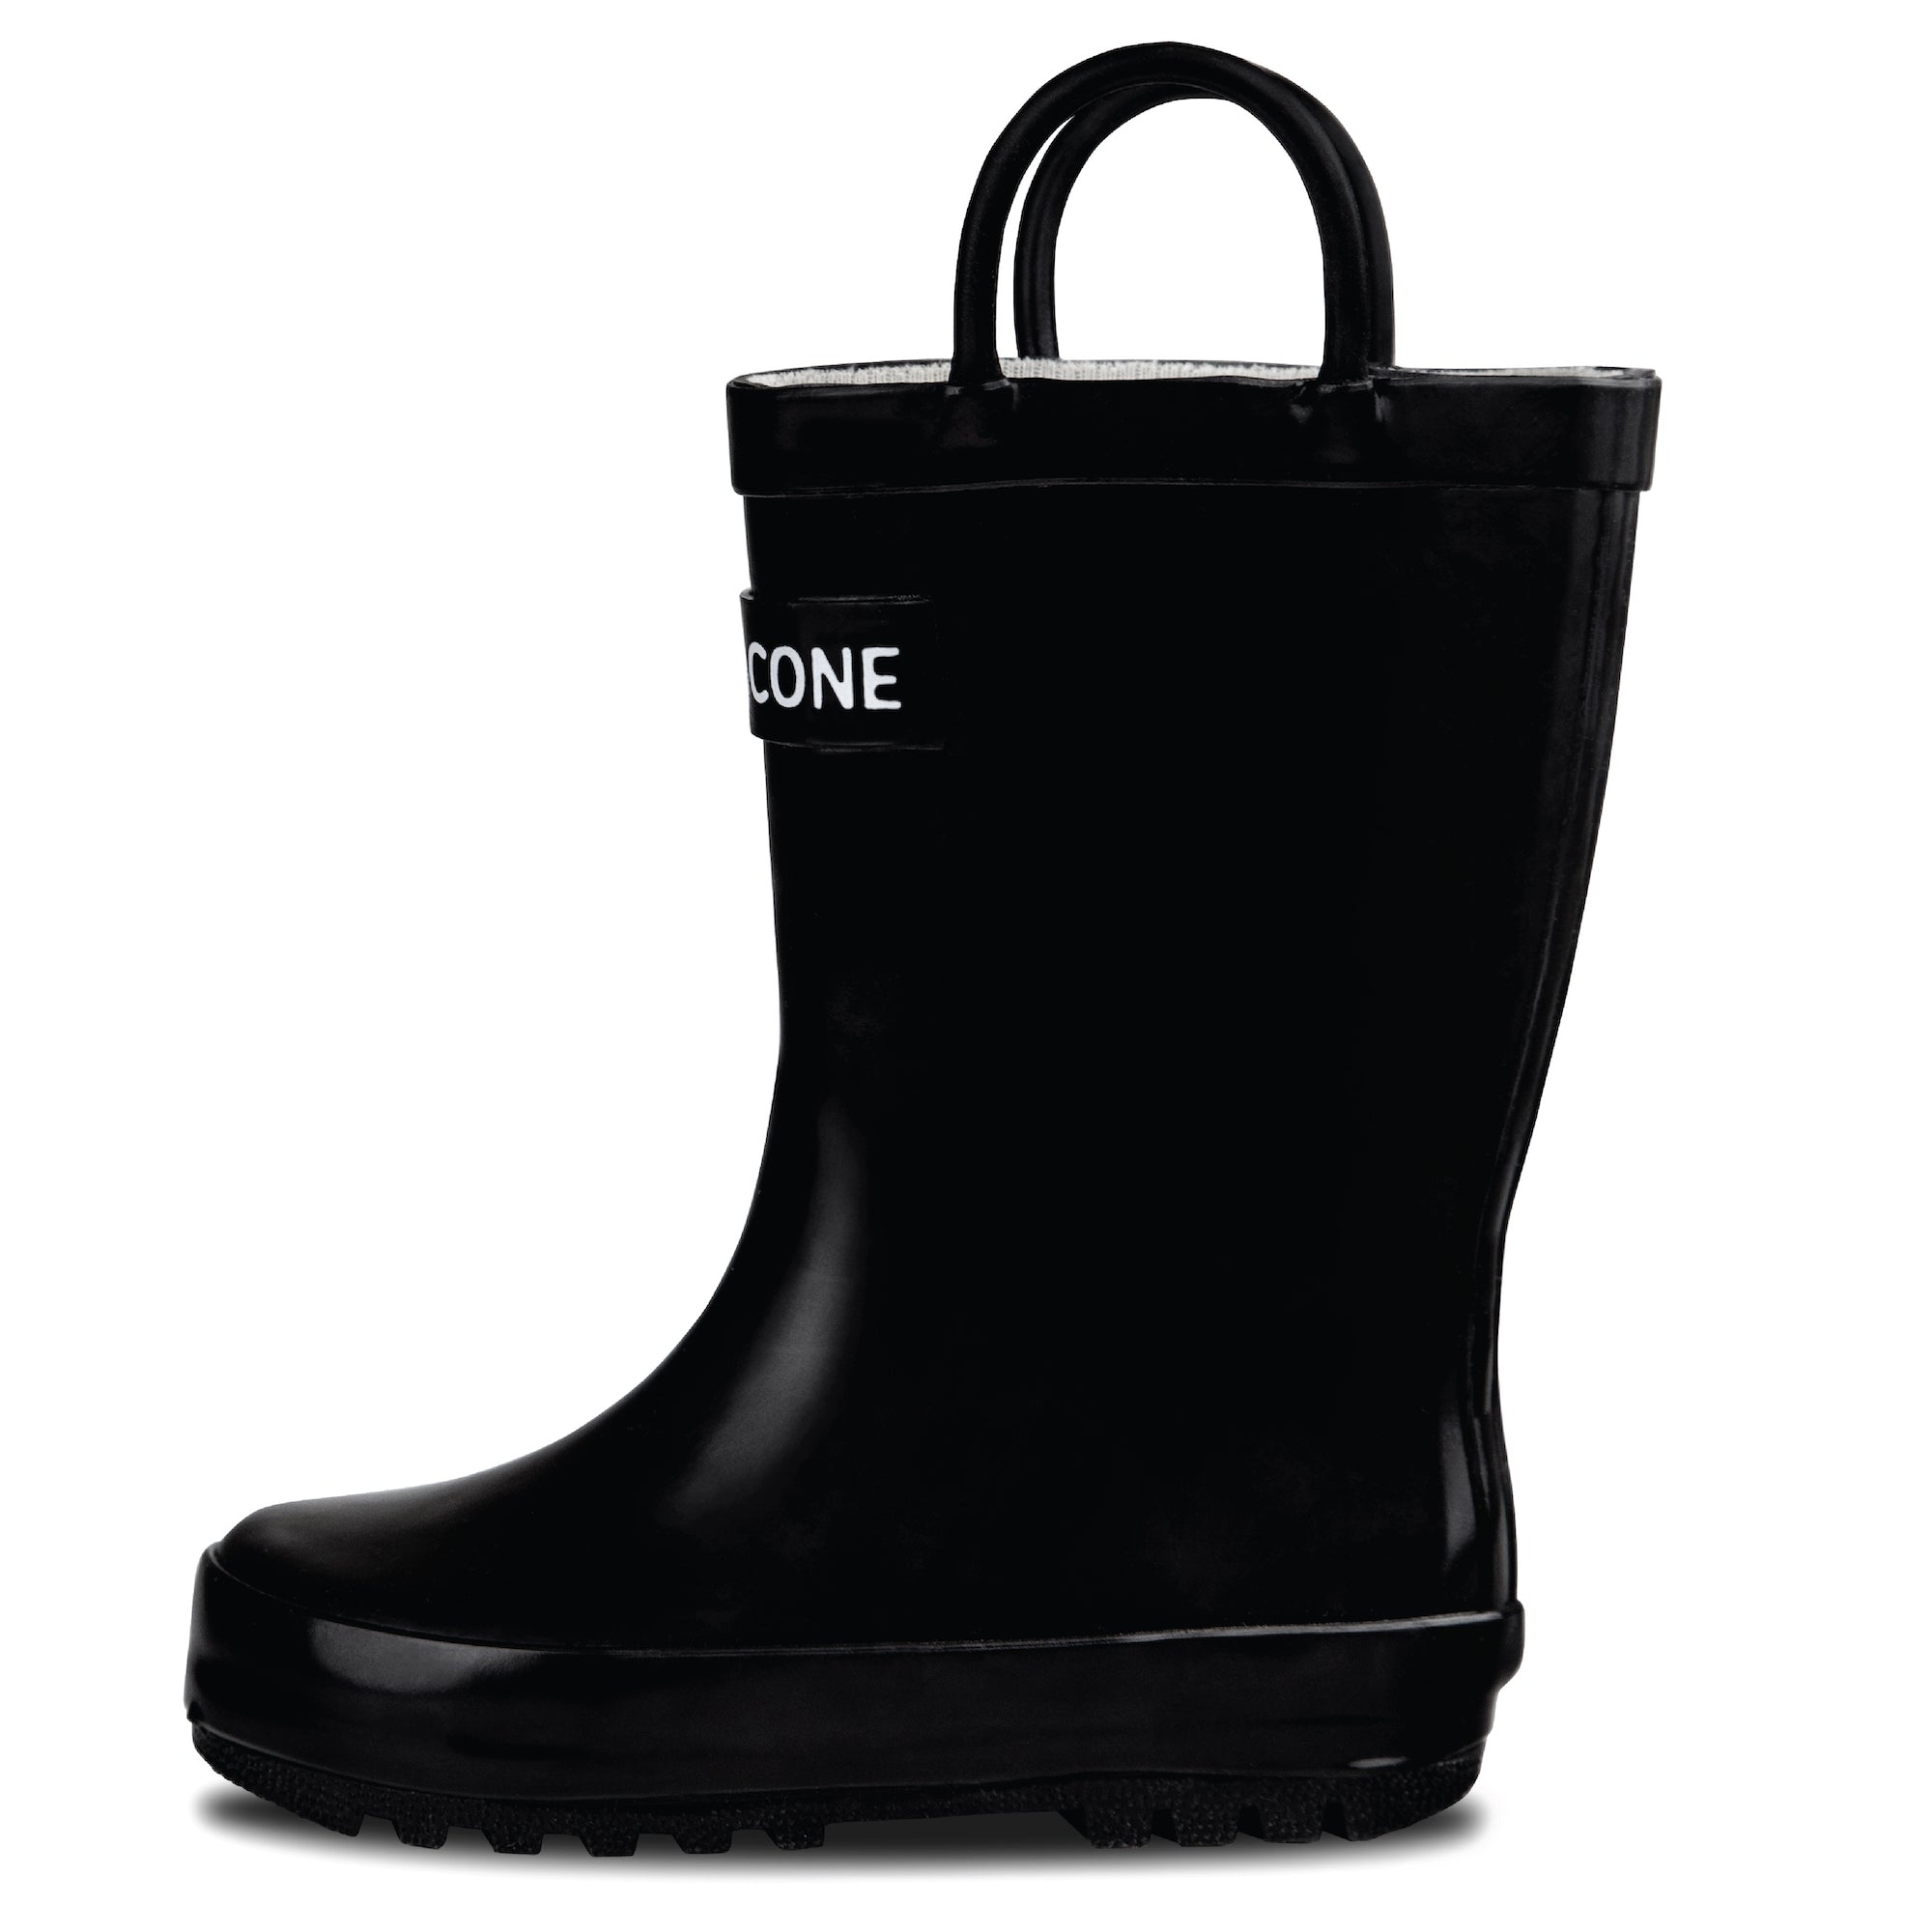 LONECONE Shiny Black Rain Boot